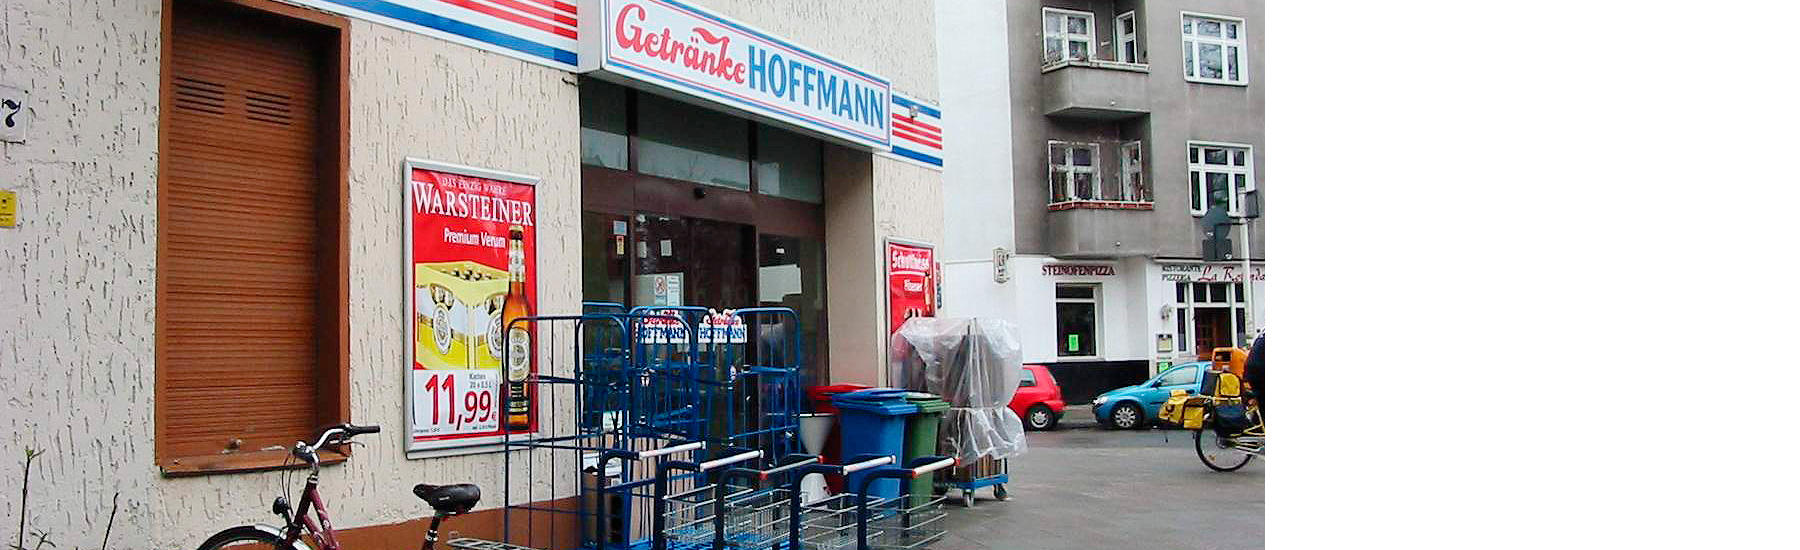 Bild 1 Getränke Hoffmann in Berlin